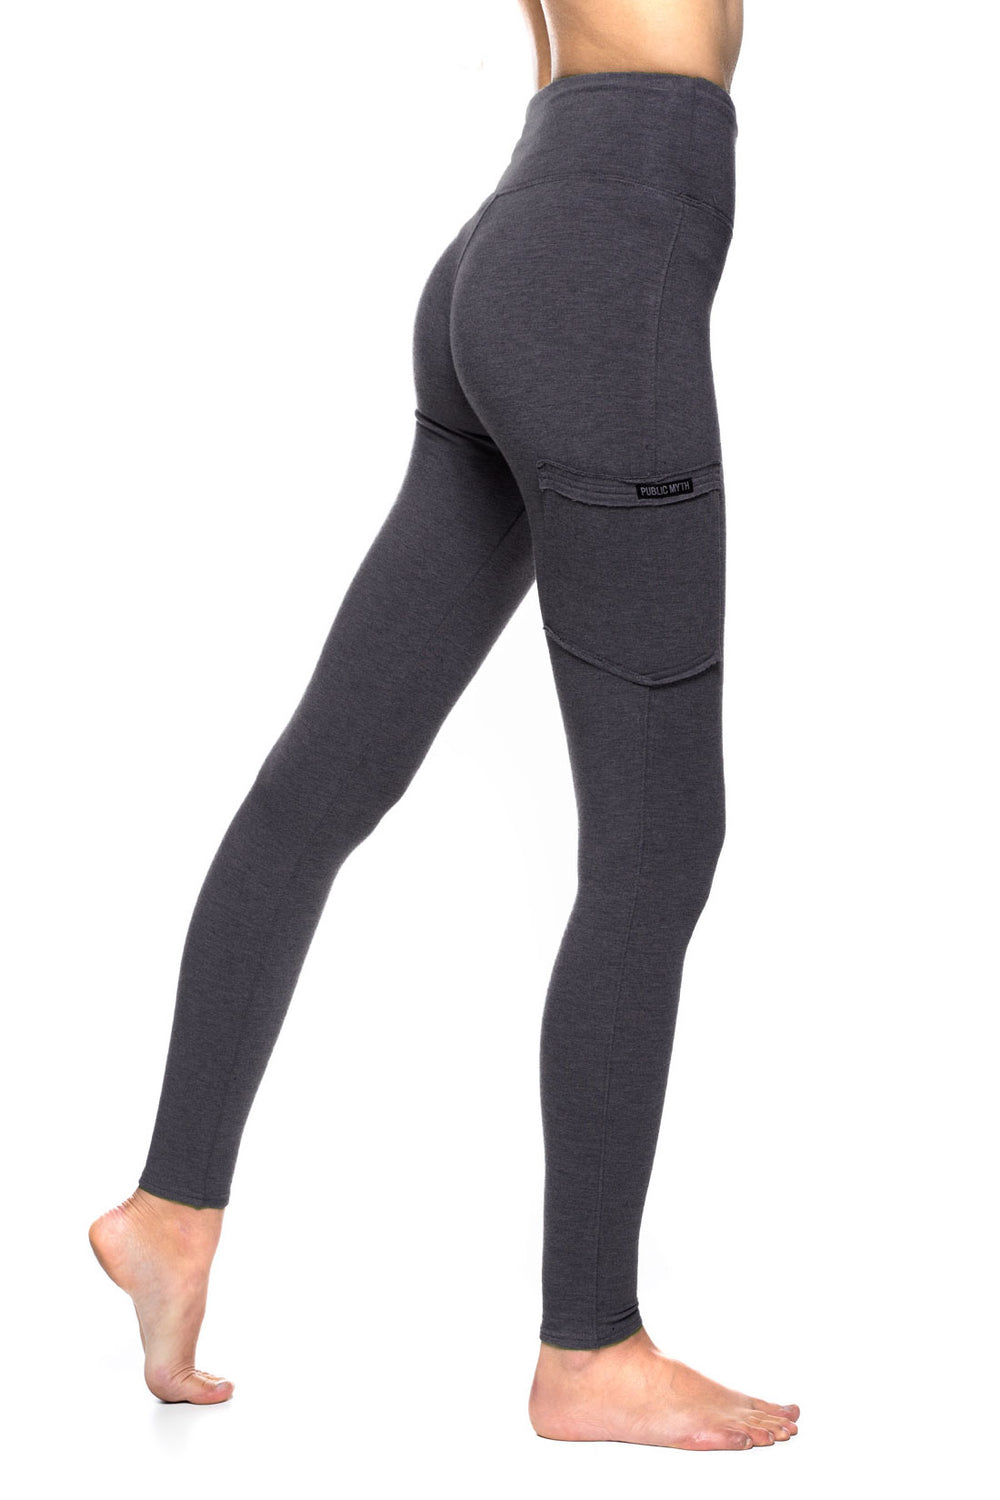 S1031 Premium Yoga Clothes Sets Yoga Bra and Yoga leggings pants